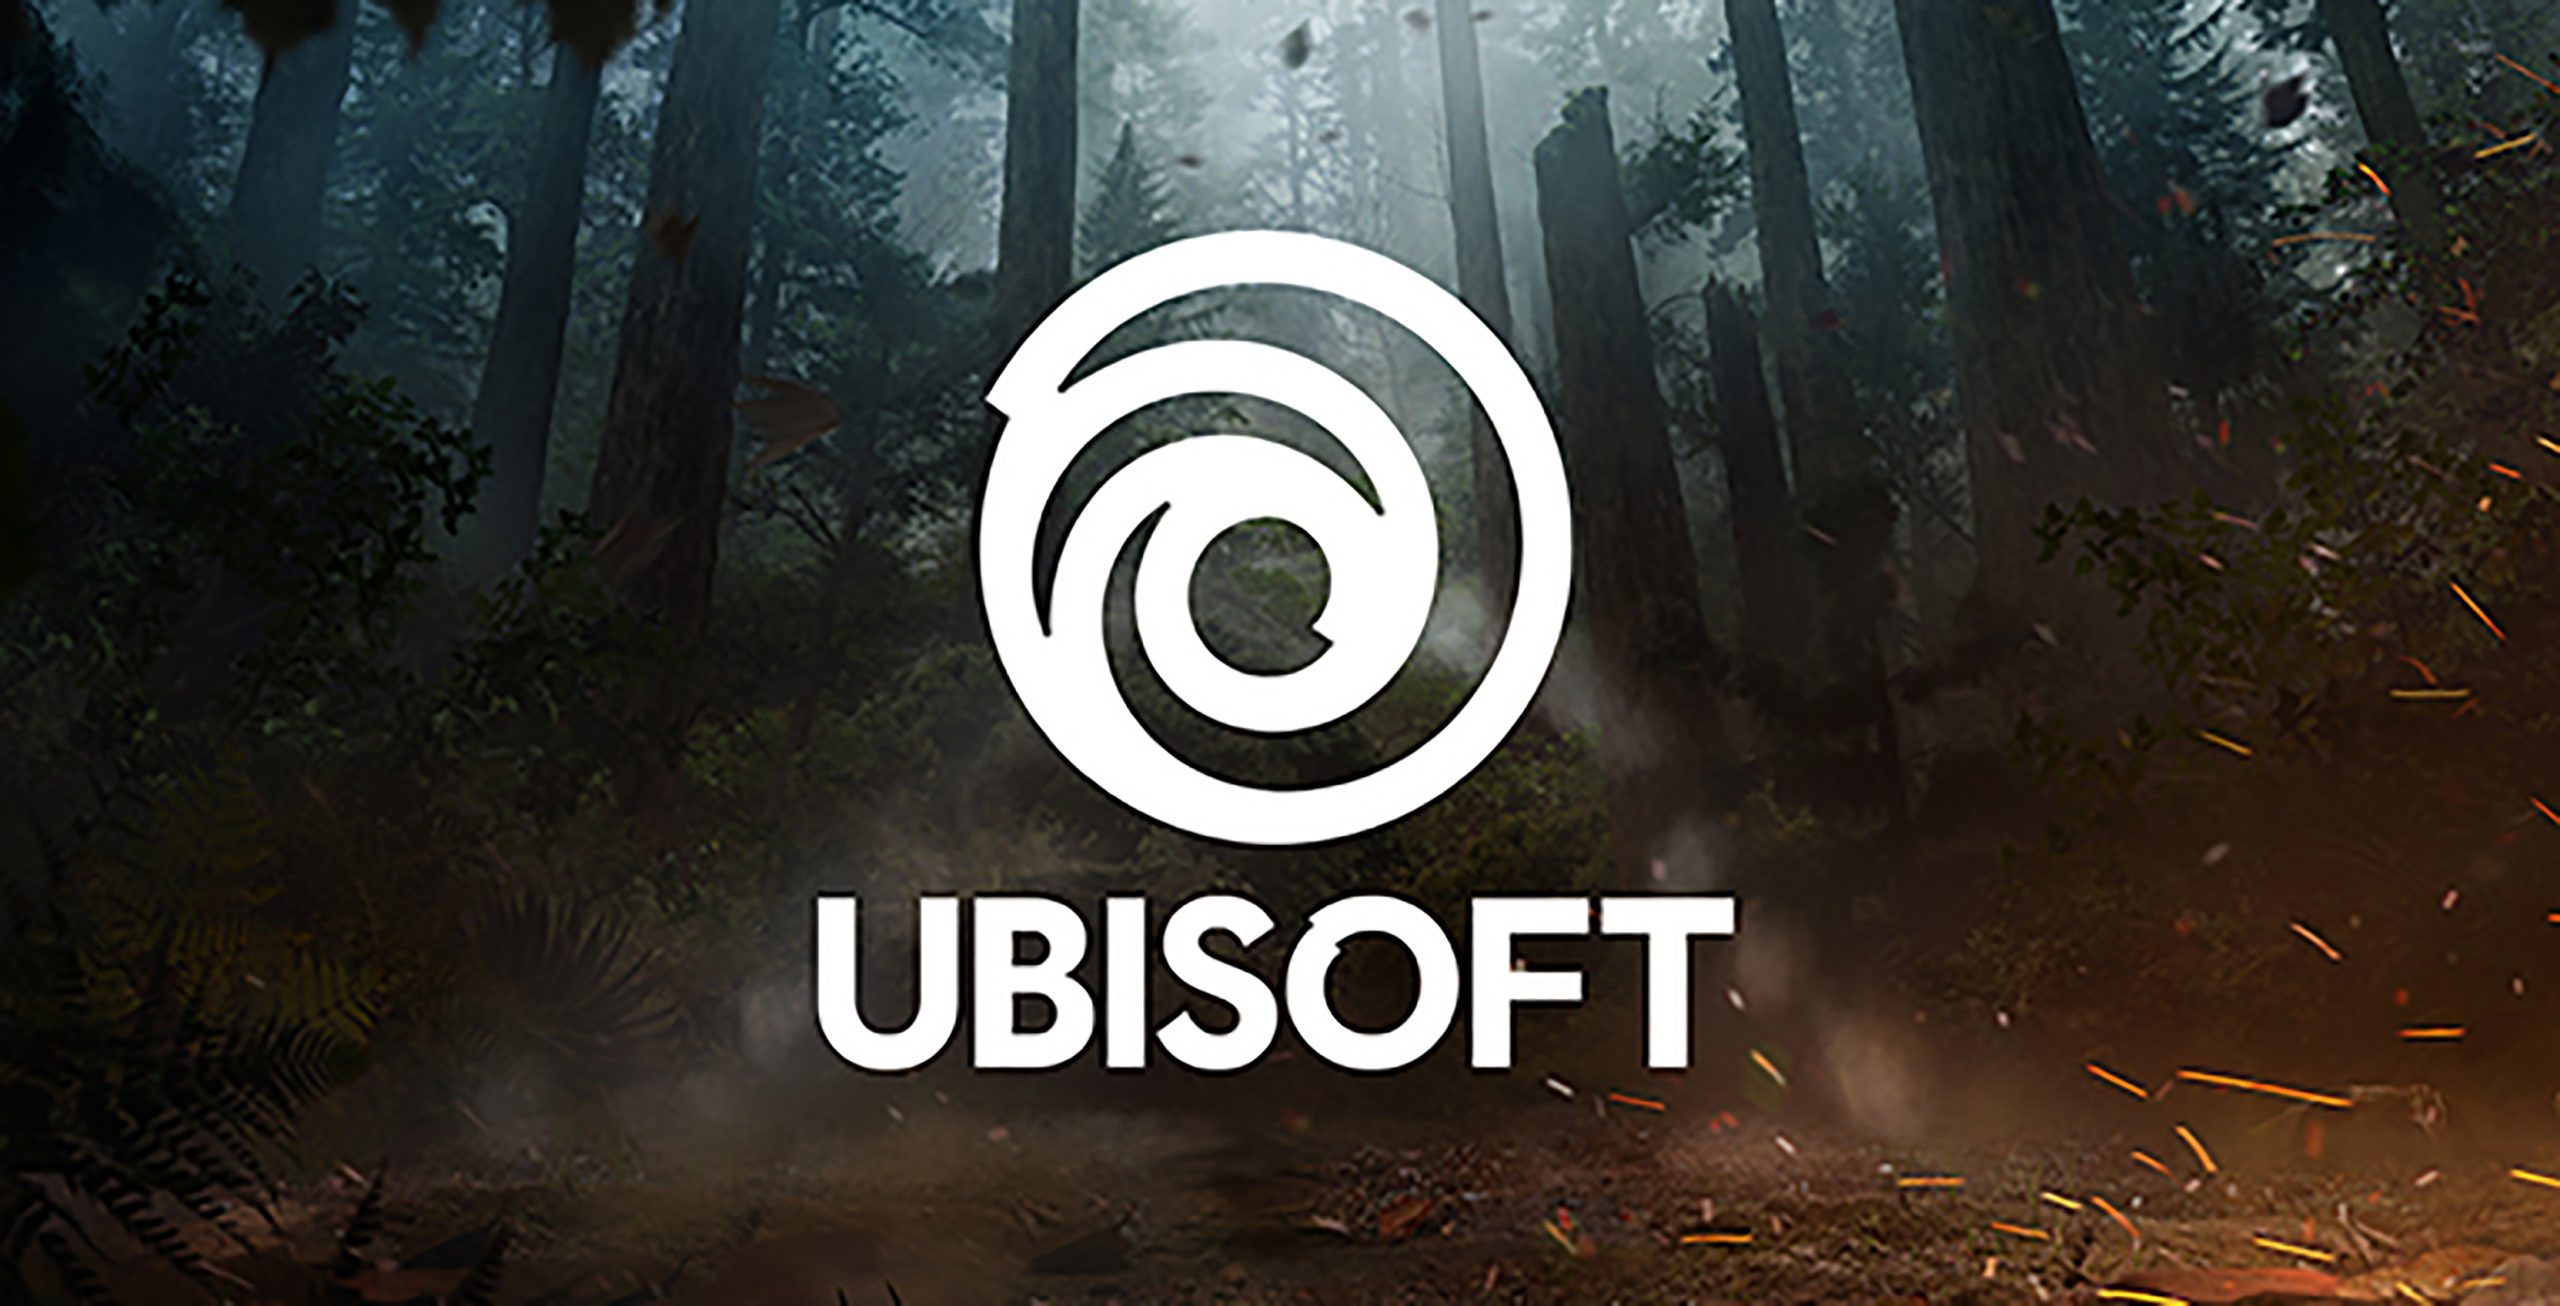 Jauns Ubisoft logotips